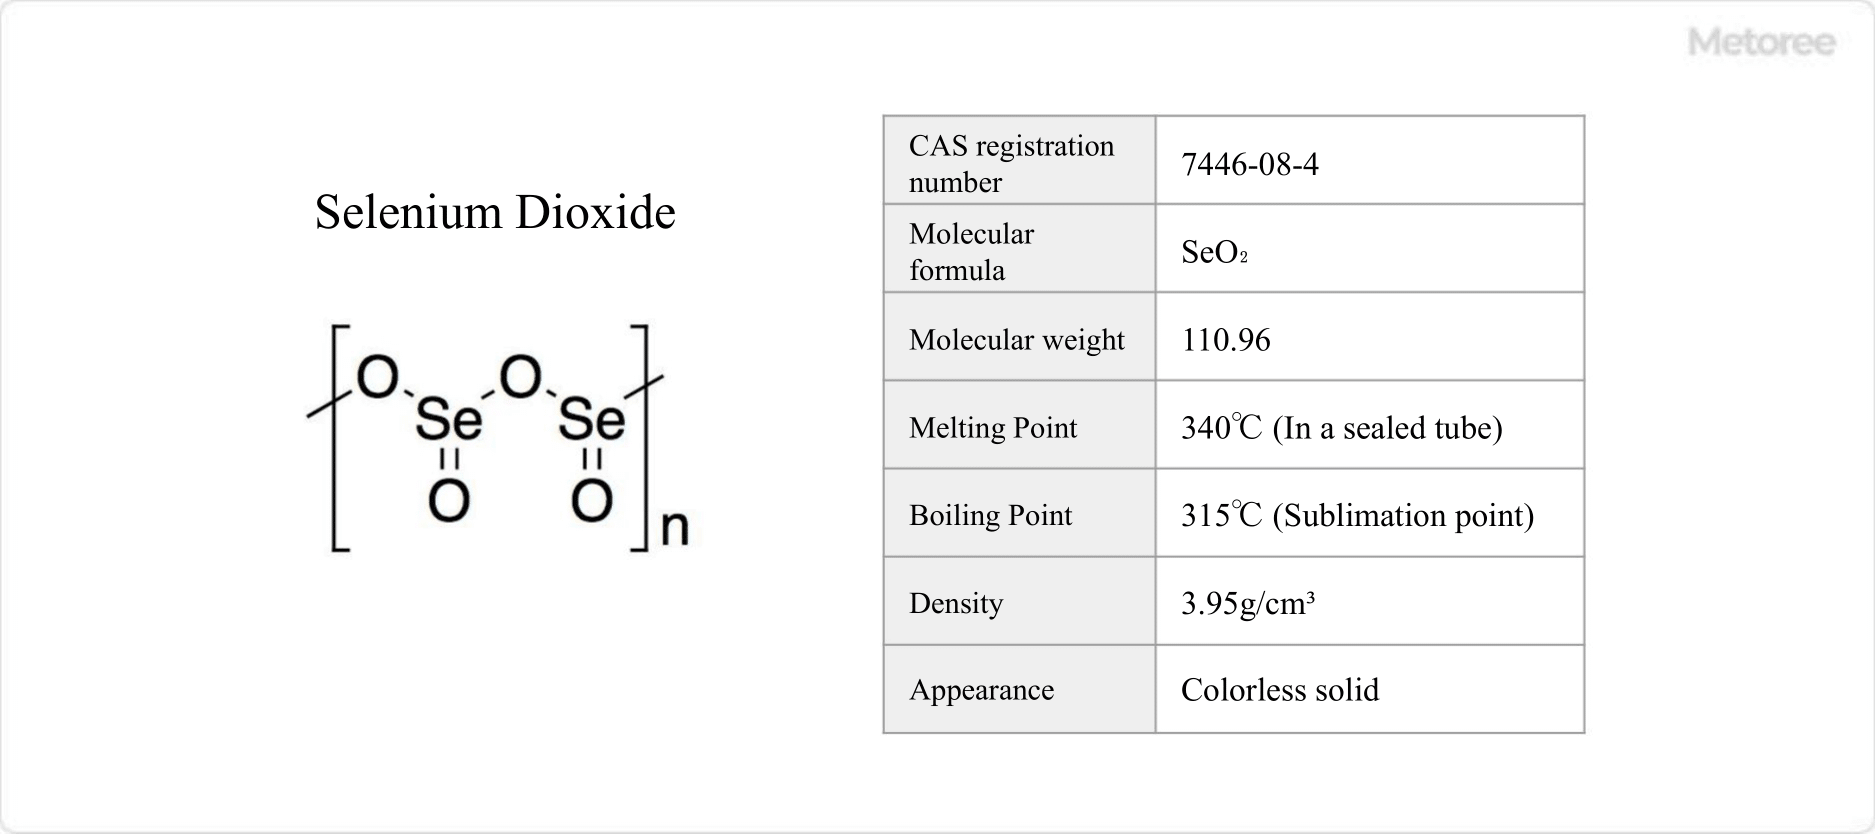 Figure 1. Basic Information on Selenium Dioxide